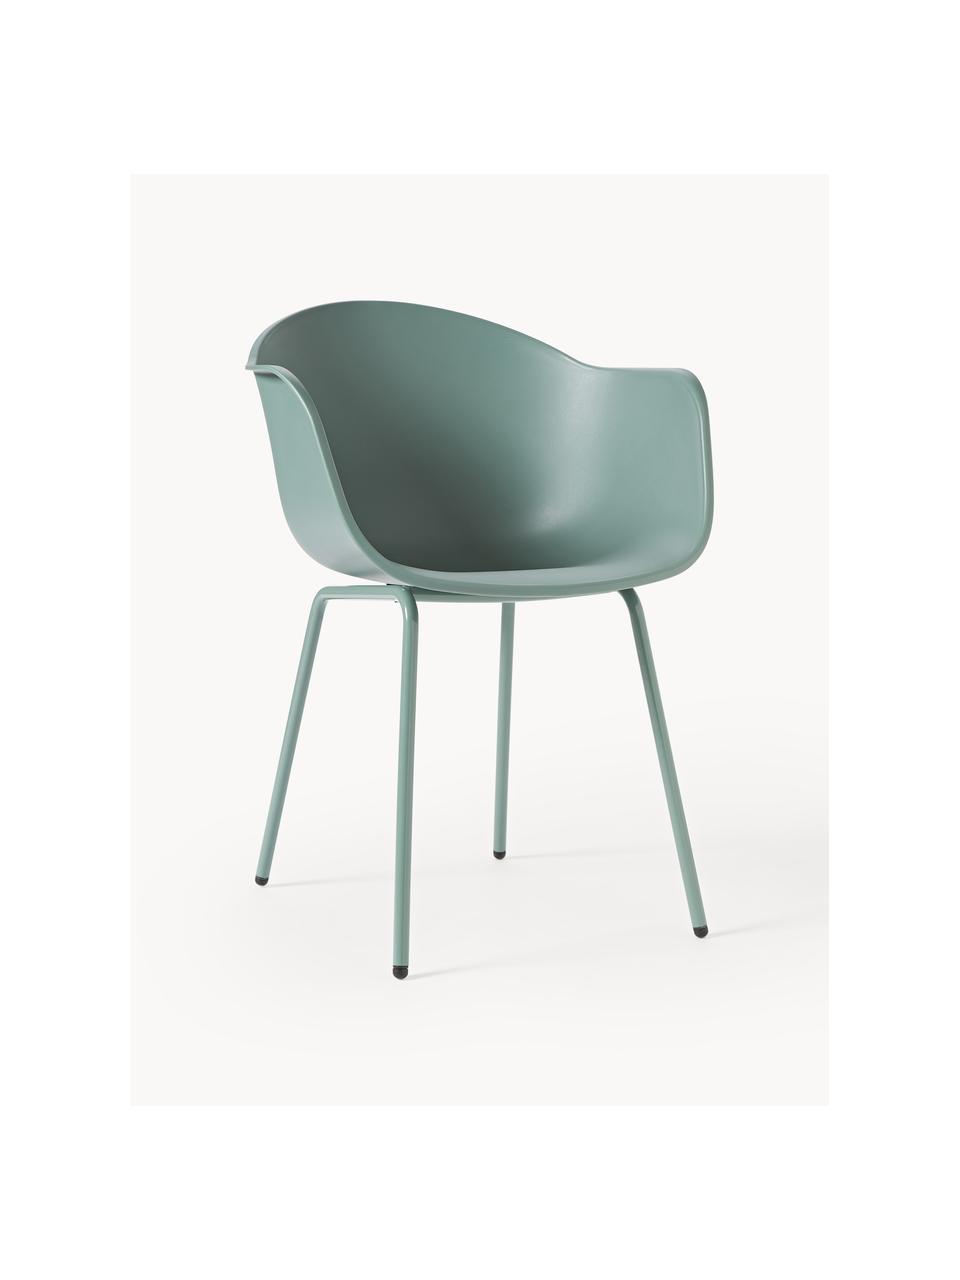 Interiérová a exteriérová stolička Claire, Zelená, Š 60 x H 54 cm